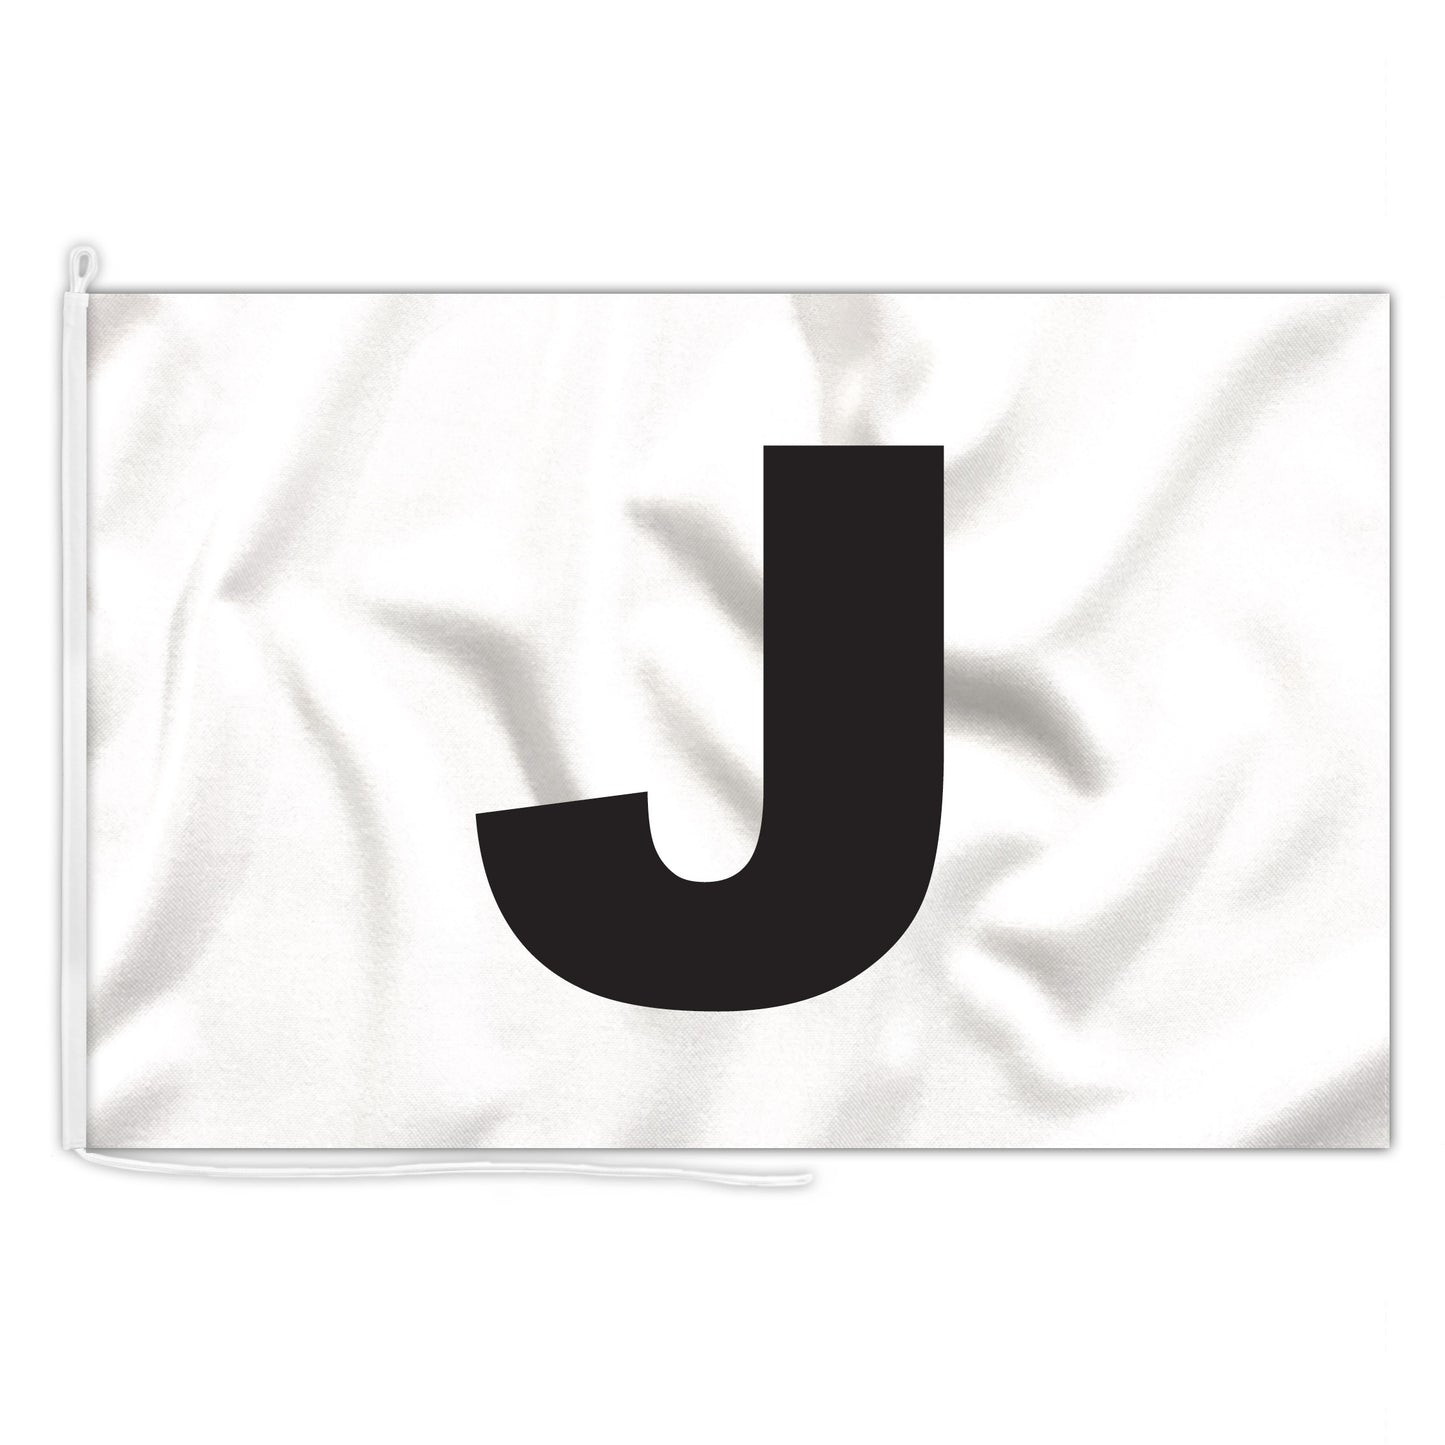 Regatta flag - JURY or REFEREE